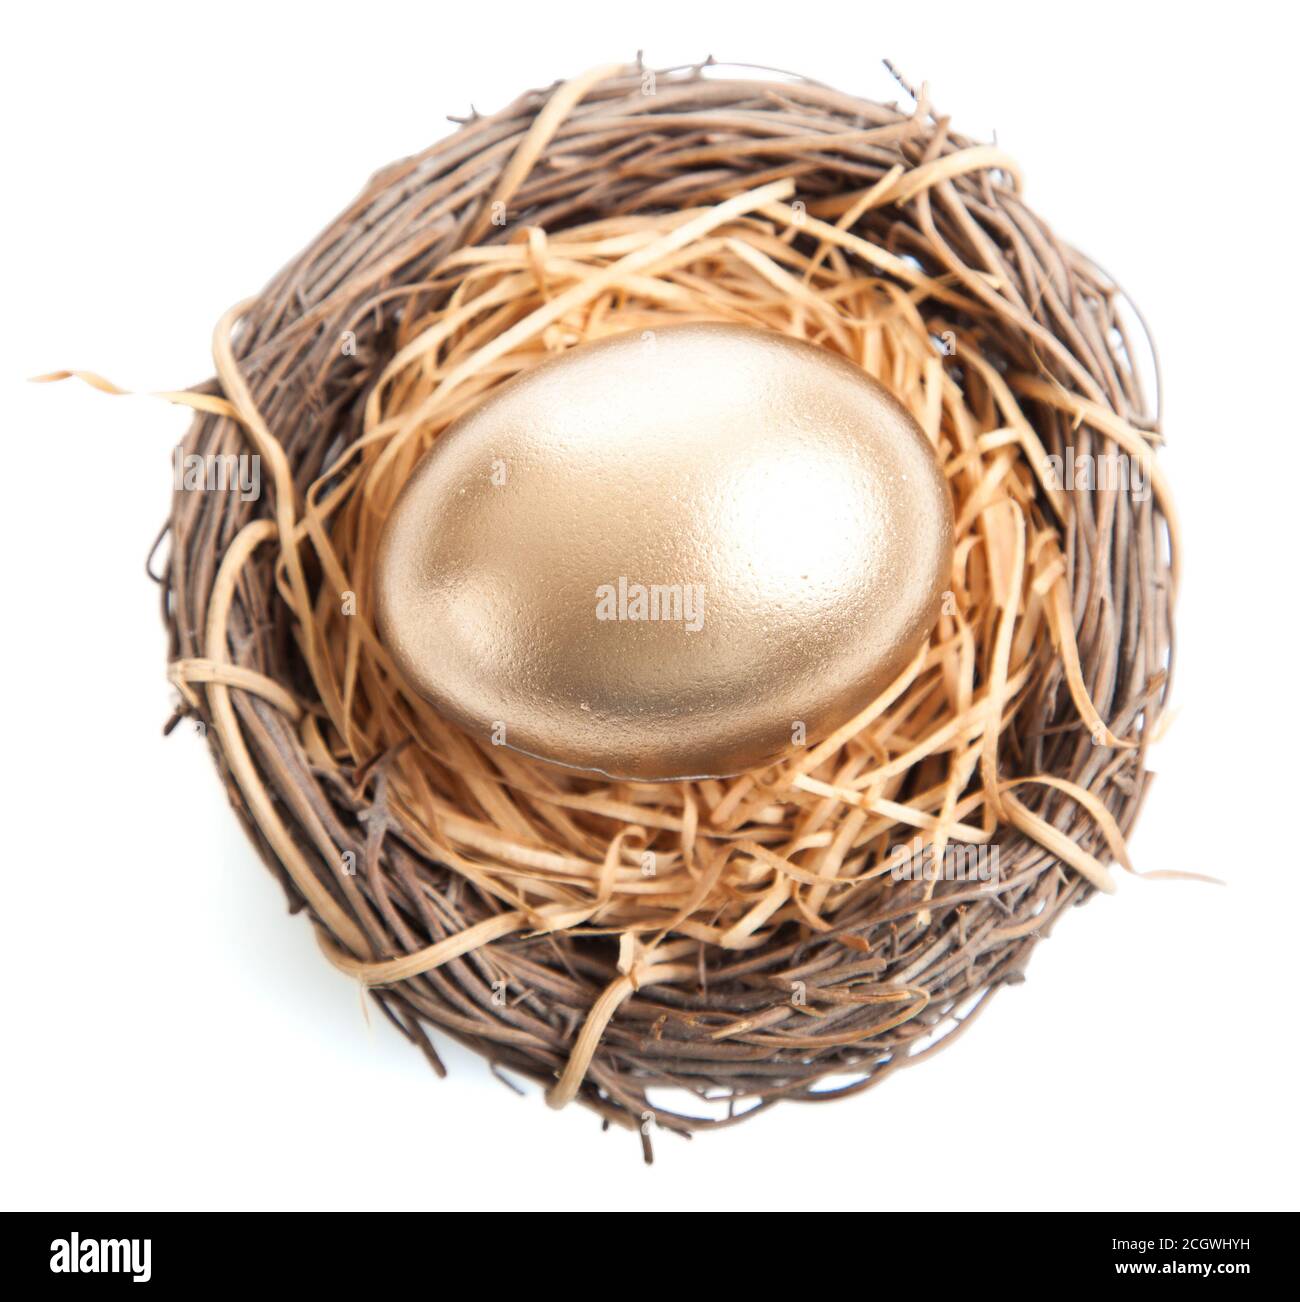 A Golden egg in nest on white background Stock Photo